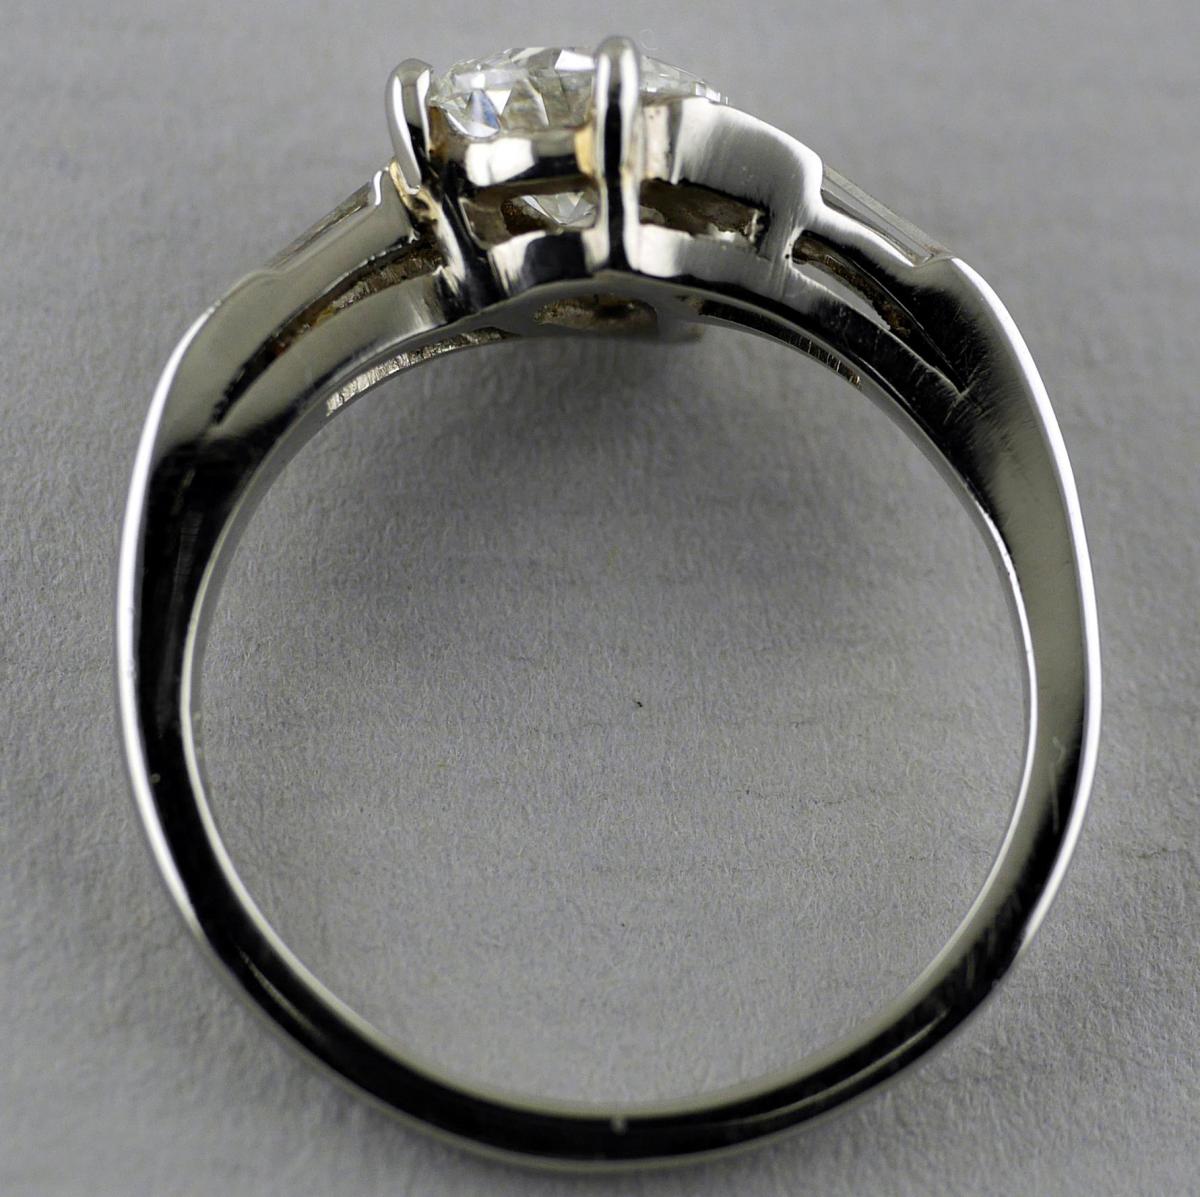 1.01 Carat Pear Shape Certified D Color Platinum Diamond Ring